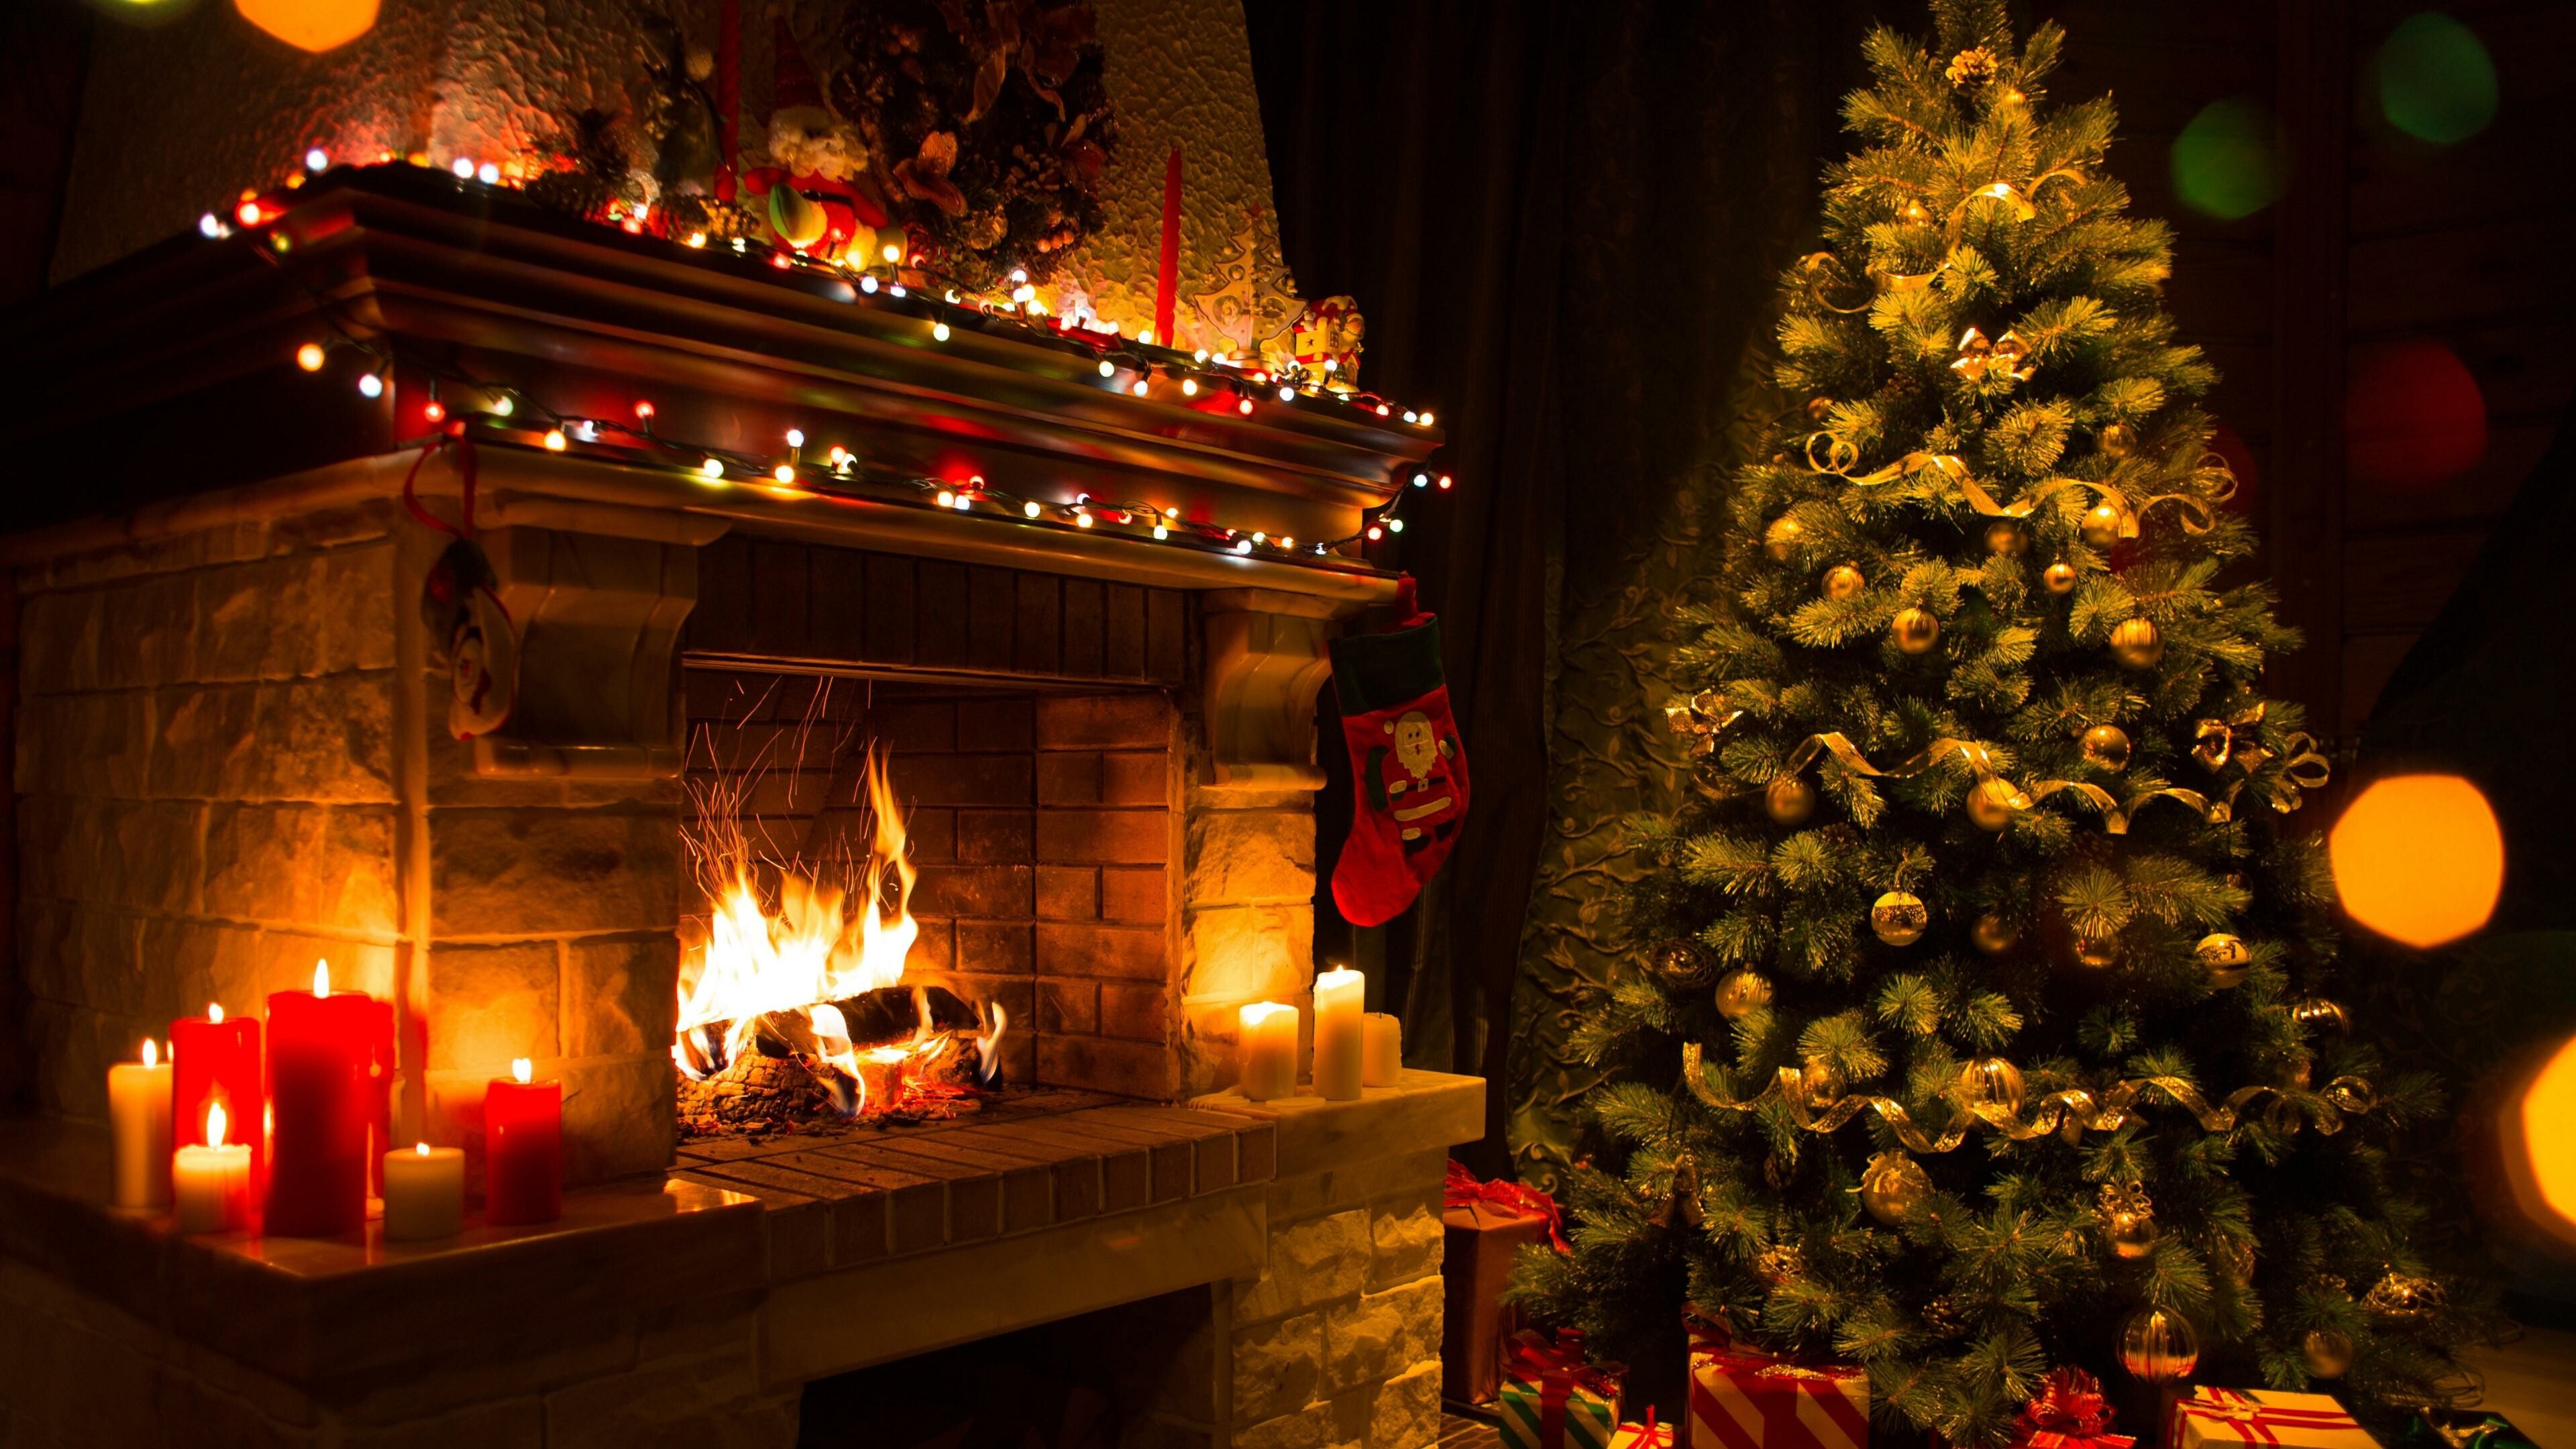 Christmas Fireplace: Light, Wood, Holiday ornament, Evergreen. 3840x2160 4K Wallpaper.